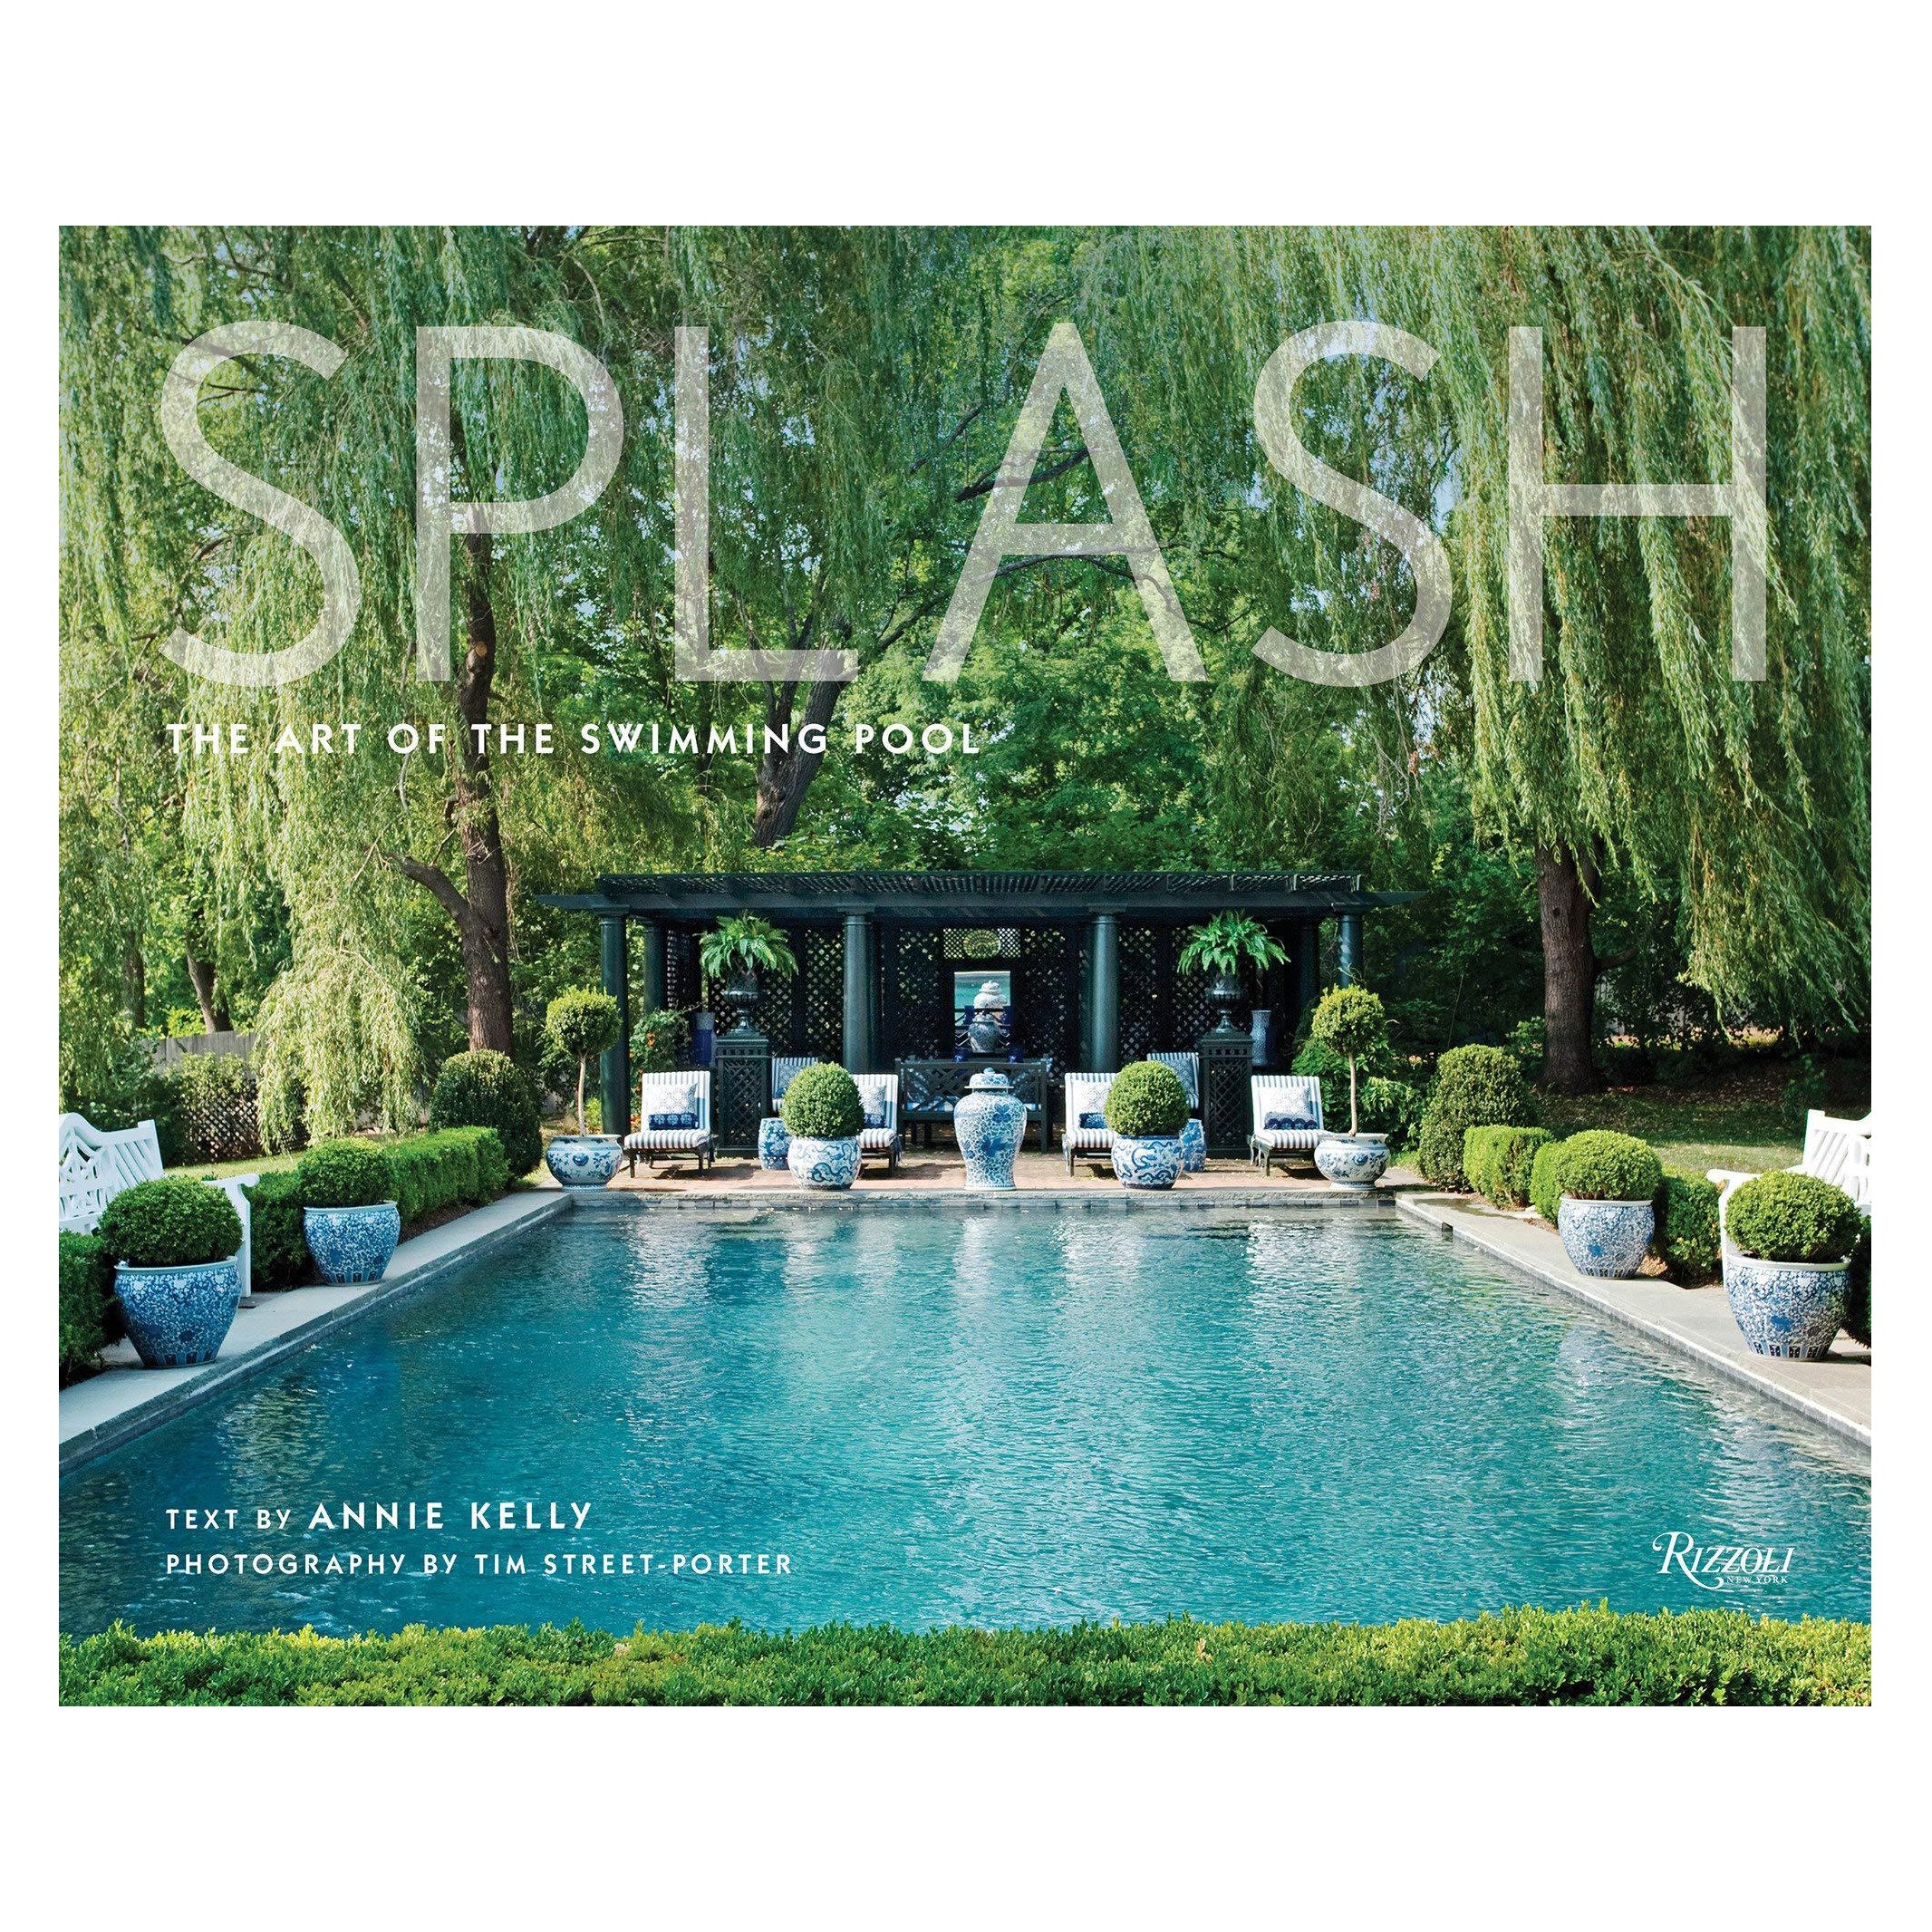 Splash: The Art of the Swimming Pool